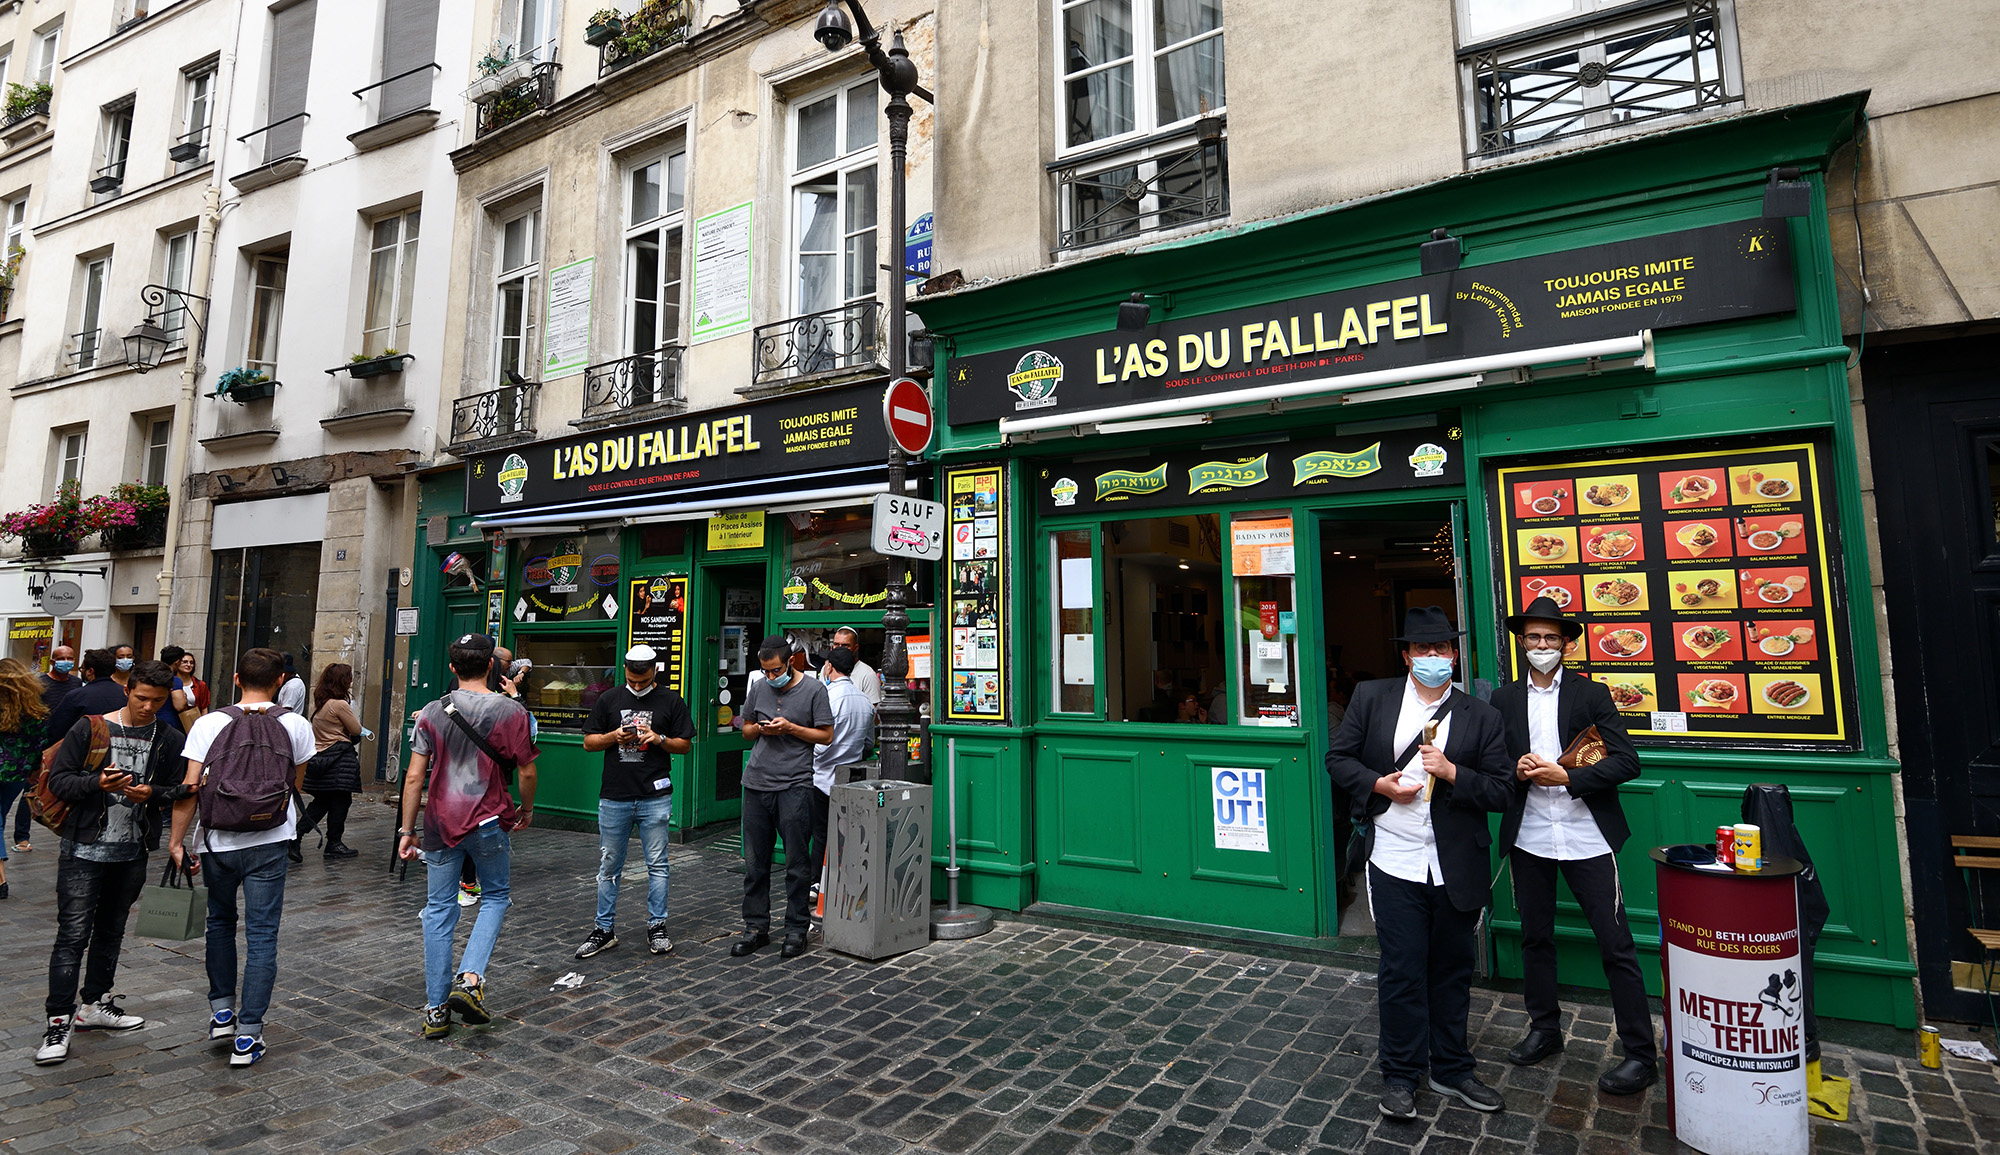 
L&#8217;As du Fallafel restaurant in the Marais district, hosting one of Paris&#8217;s main Jewish communities, on July 24, 2020. Frédéric Soltan/Corbis via Getty Images.






